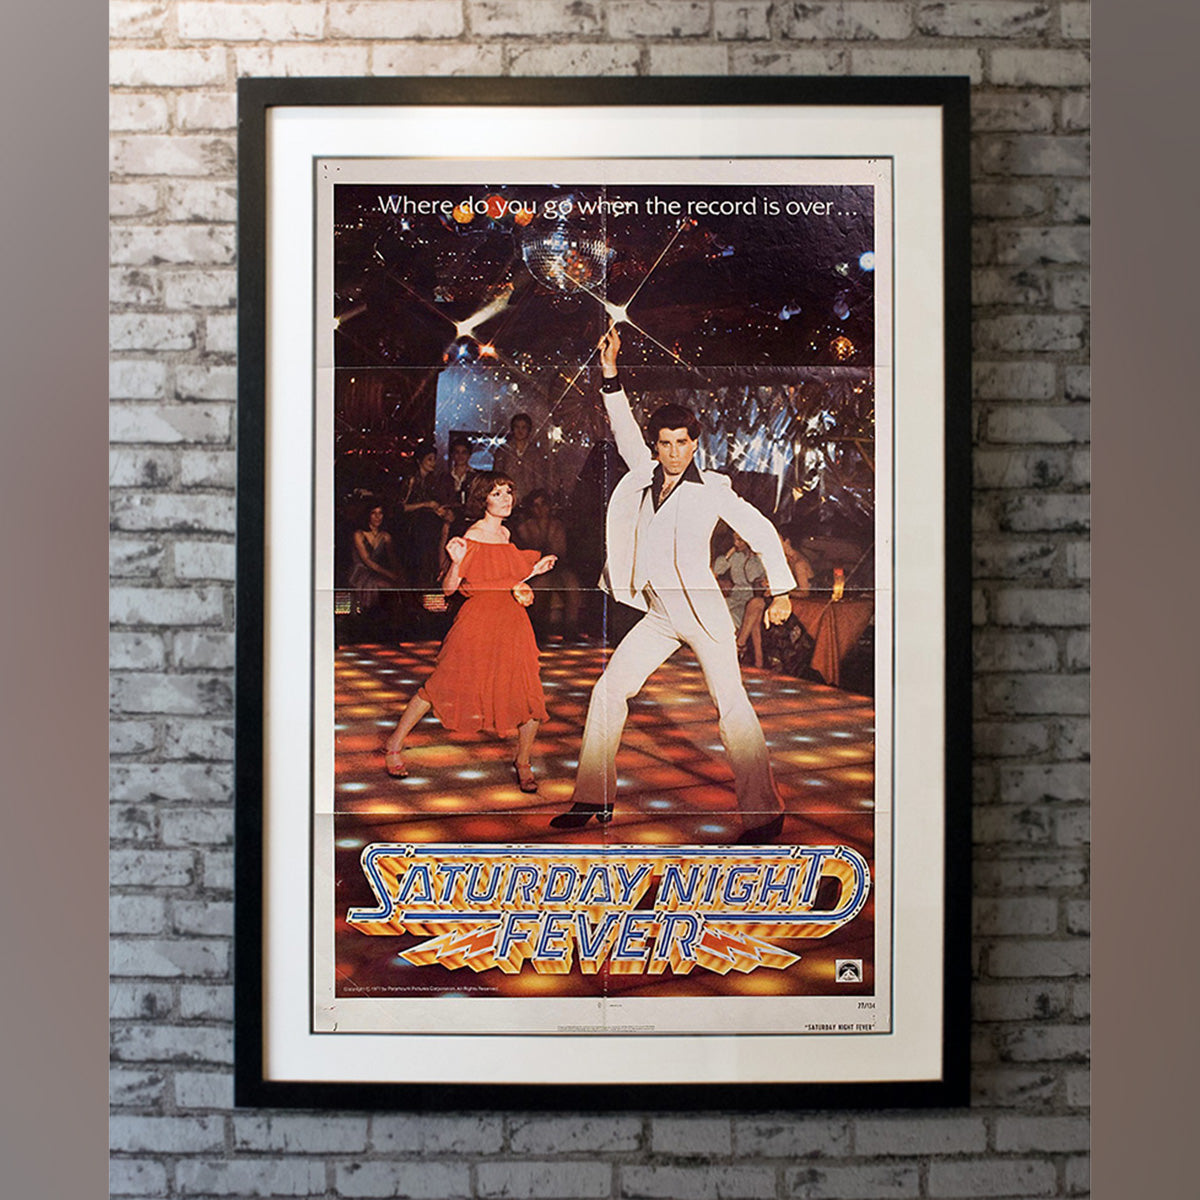 Original Movie Poster of Saturday Night Fever (1977)